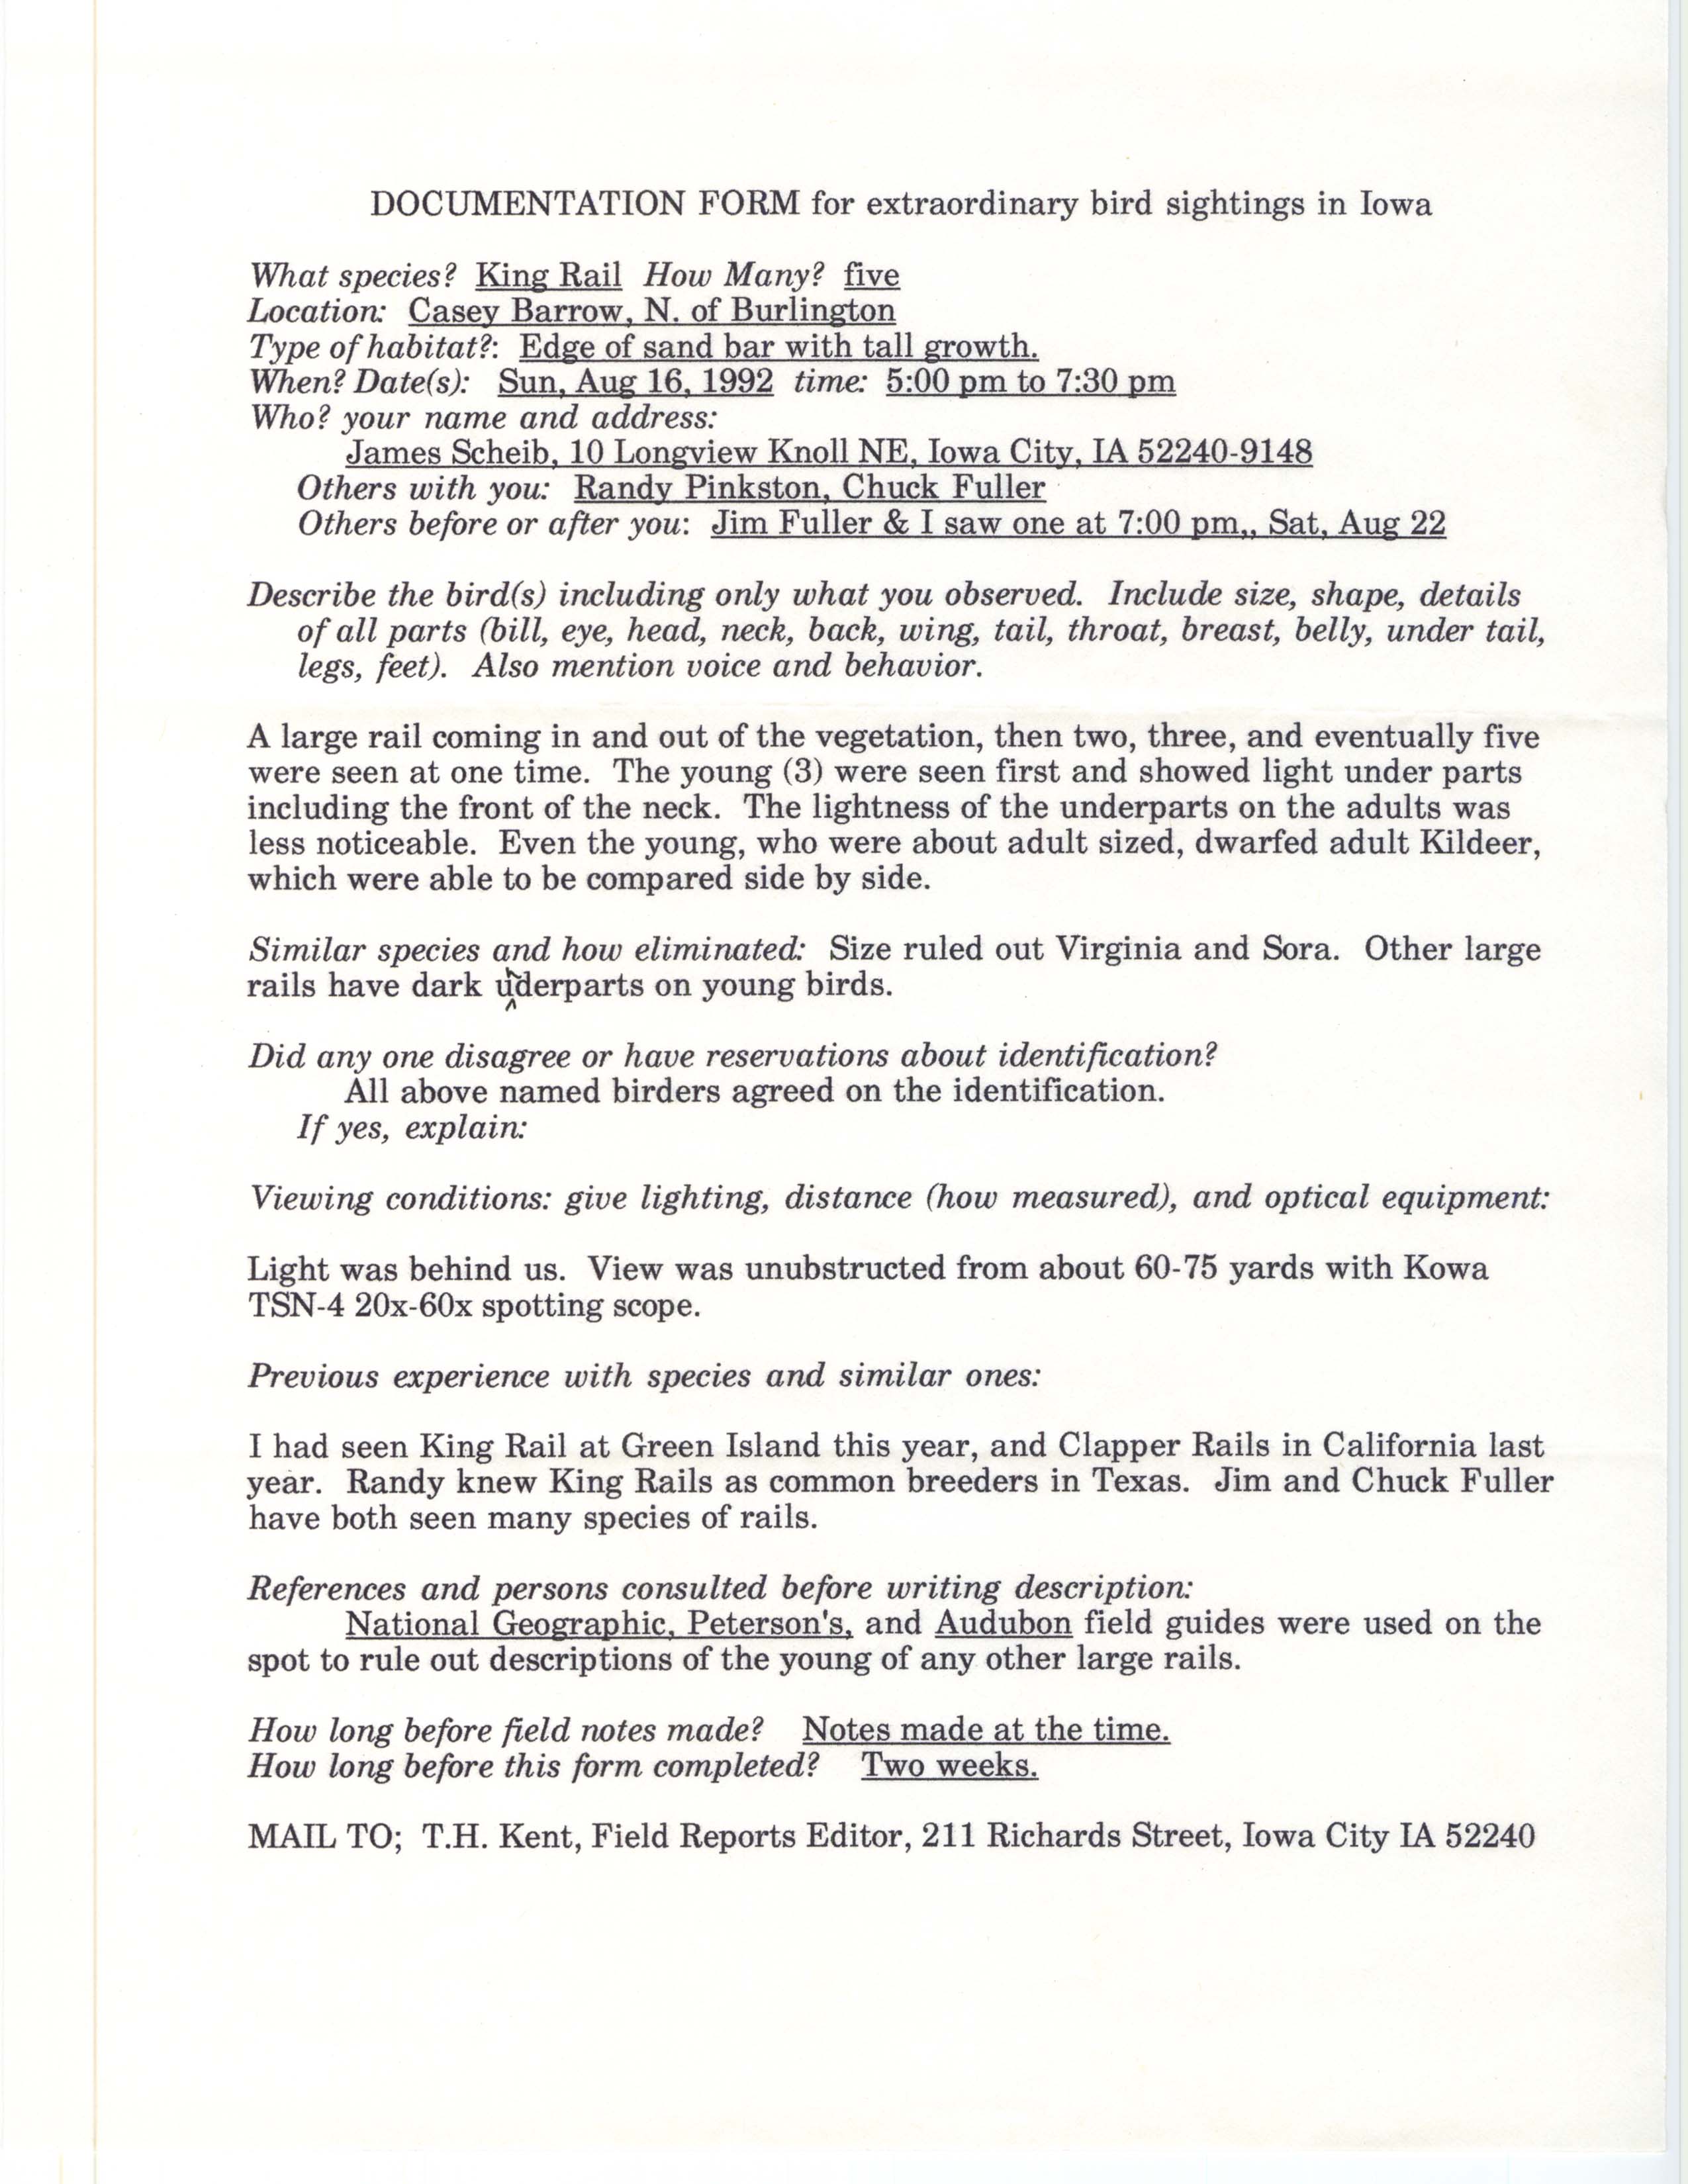 Rare bird documentation form for King Rail at Casey Barrow, 1992